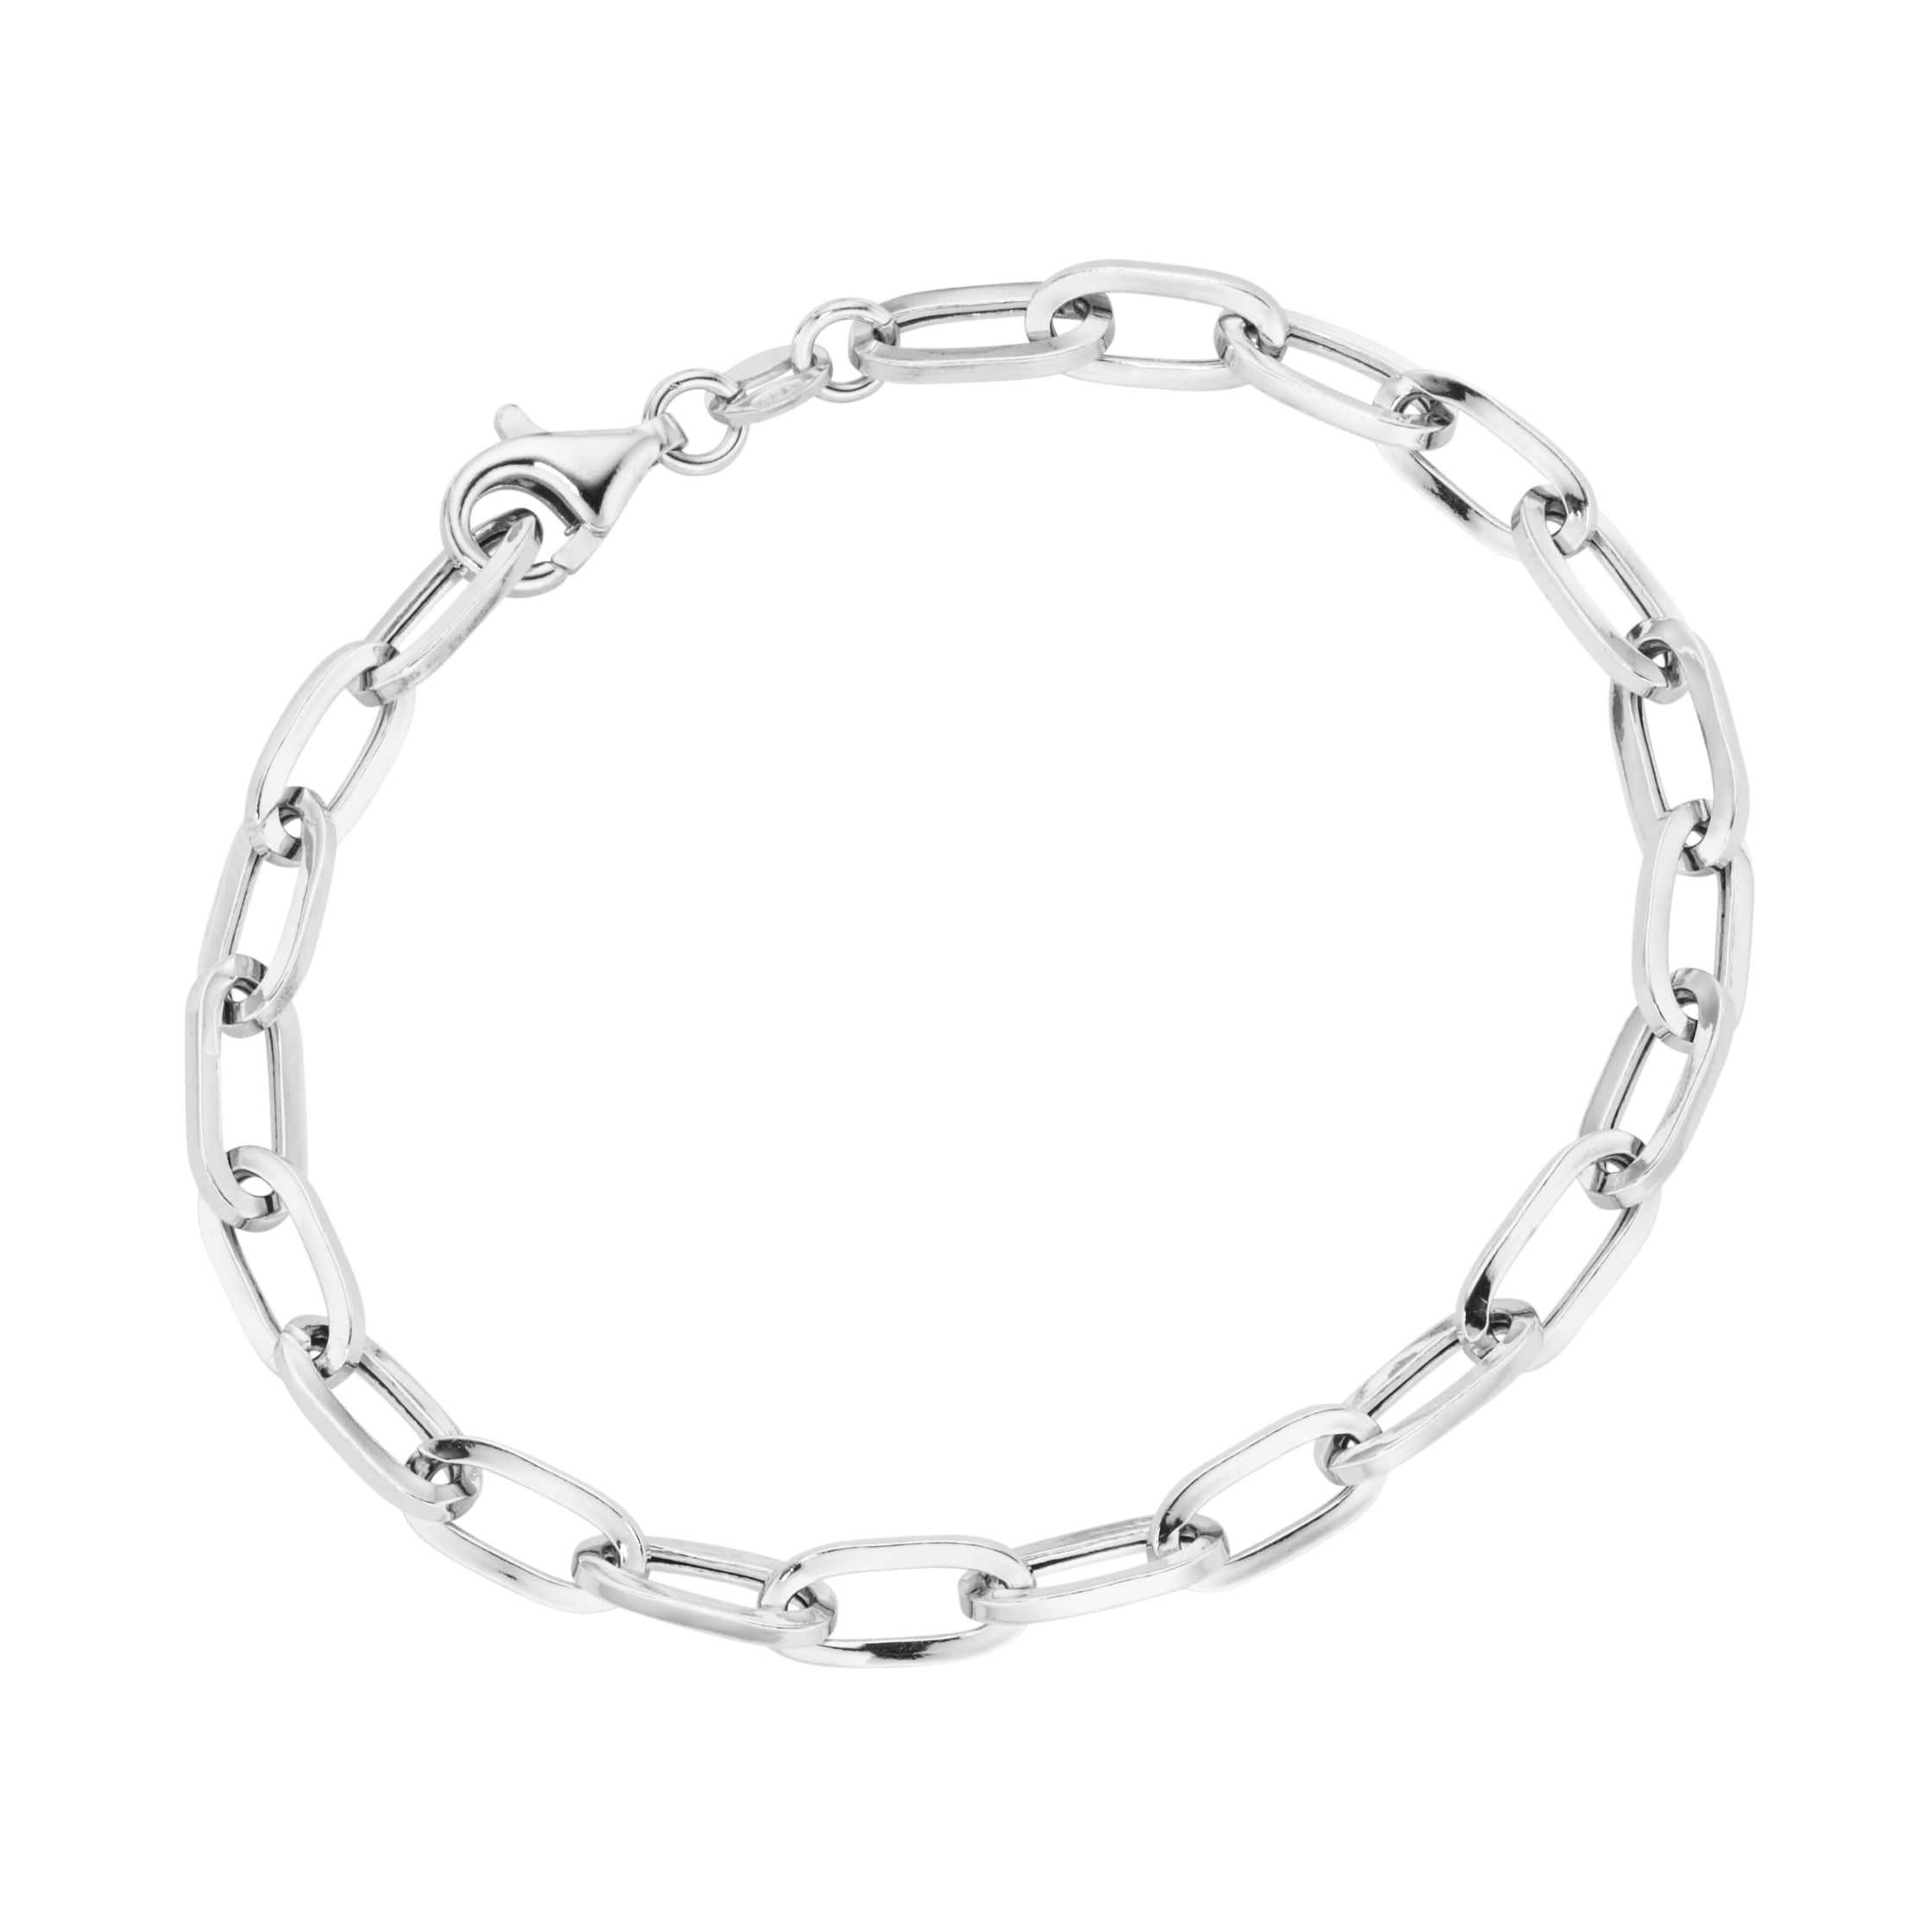 Shop OTTO Online Smart oval, »Armband Silber kaufen Jewel Glieder 925« Armband im